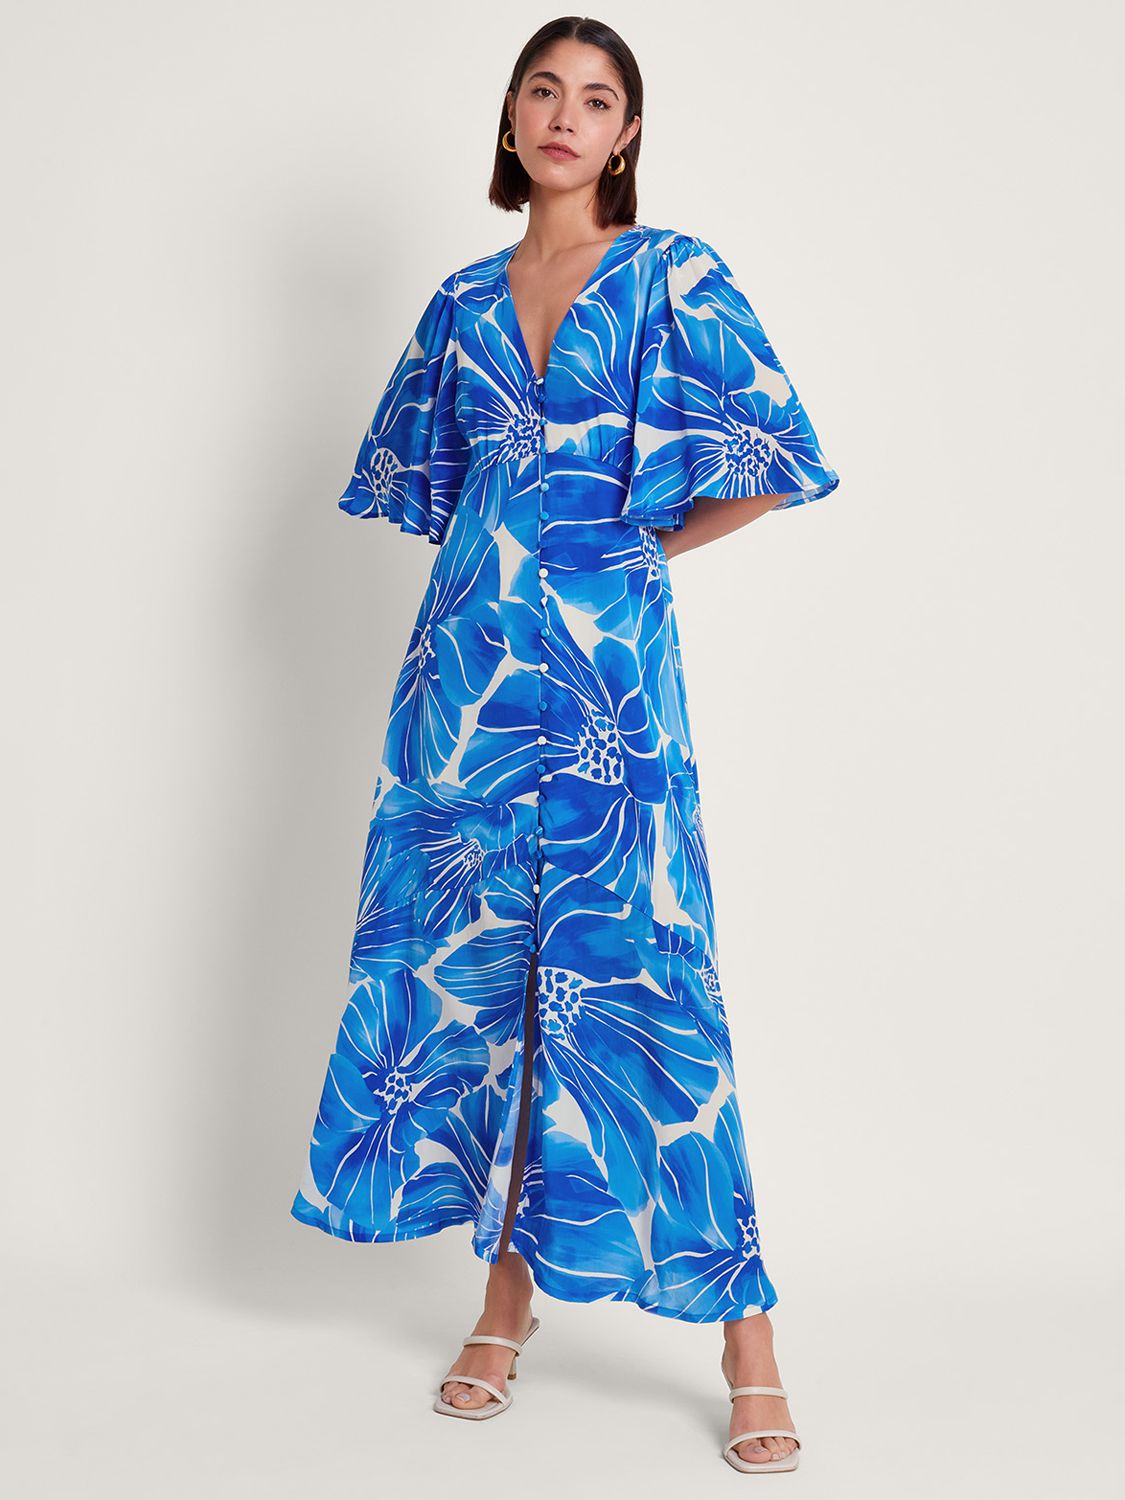 Monsoon Maura Large Floral Print Maxi Dress, Blue/White, 8